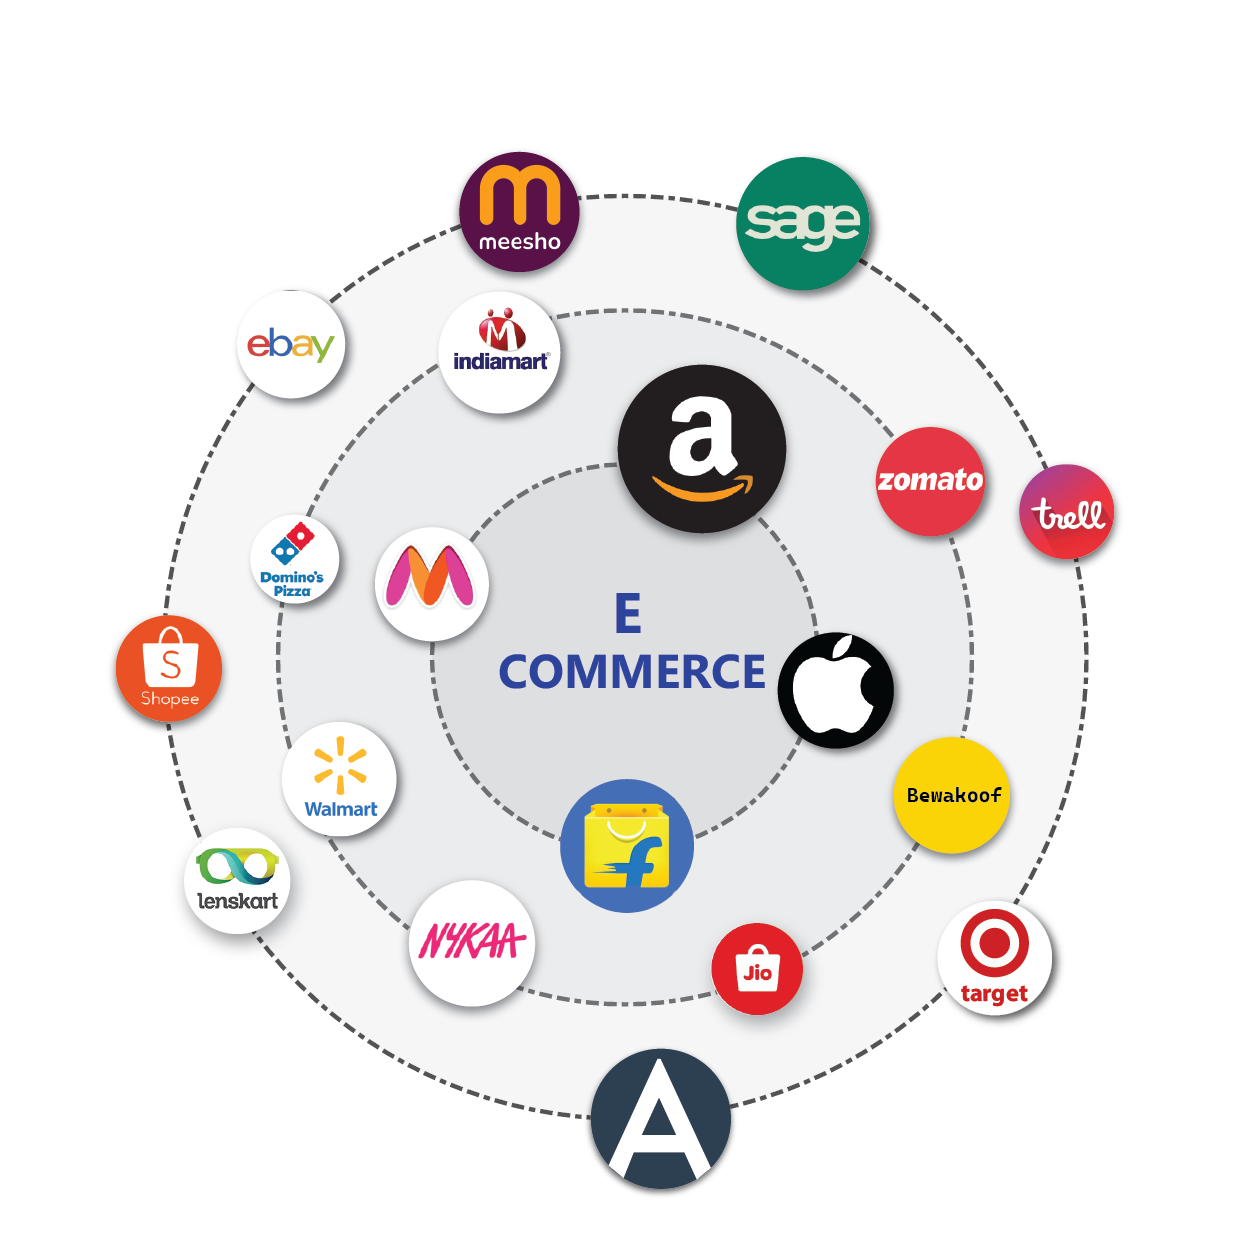 E-Commerce, Online Marketplaces, and Quick Commerce